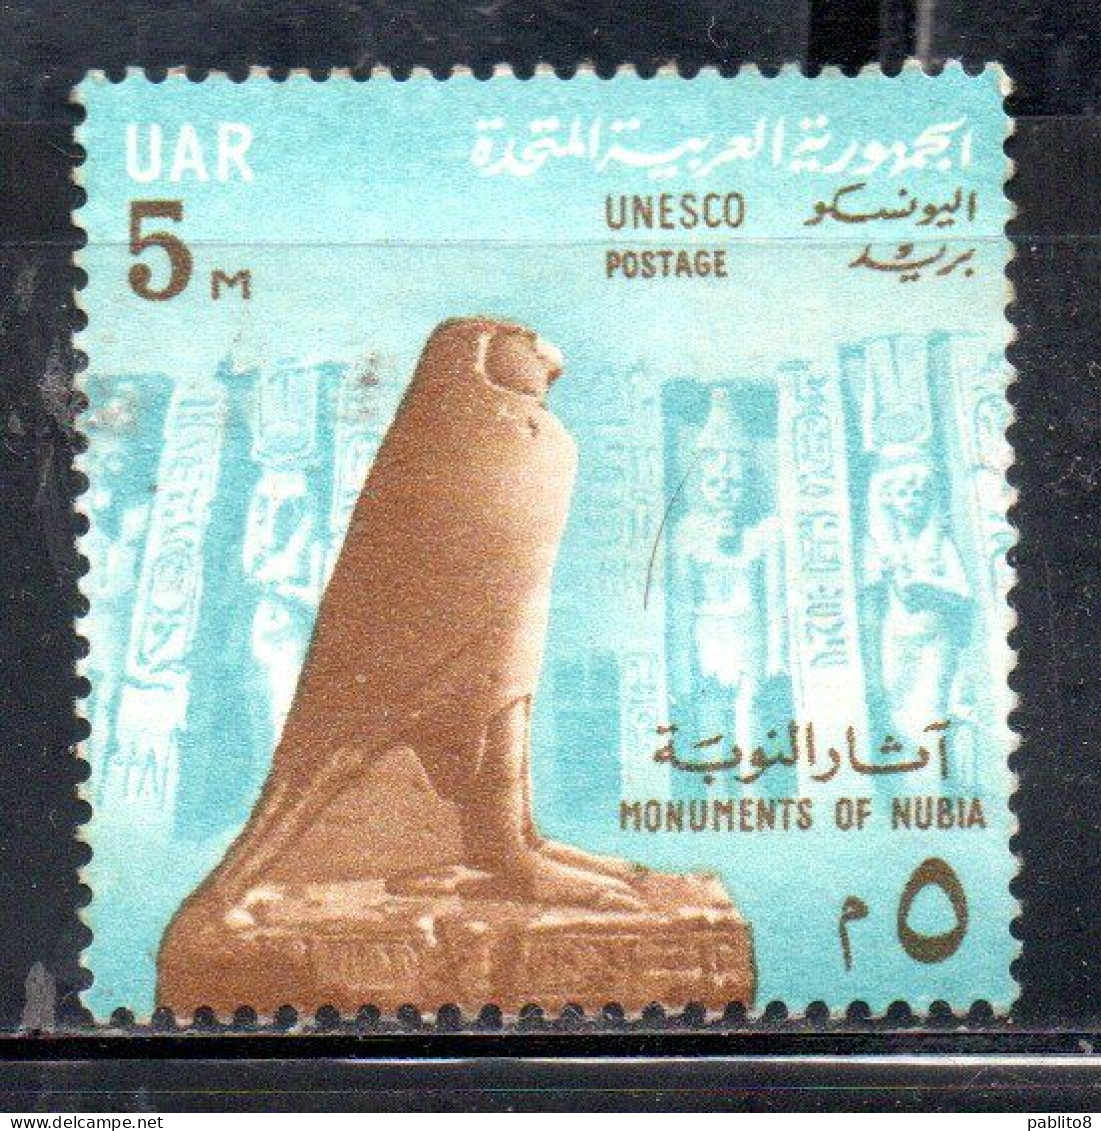 UAR EGYPT EGITTO 1964 SAVE THE MONUMENTS OF NUBIA CAMPAIGN HORUS AND FACADE OF NEFERTARI TEMPLE ABU SIMBEL 5m MH - Nuevos